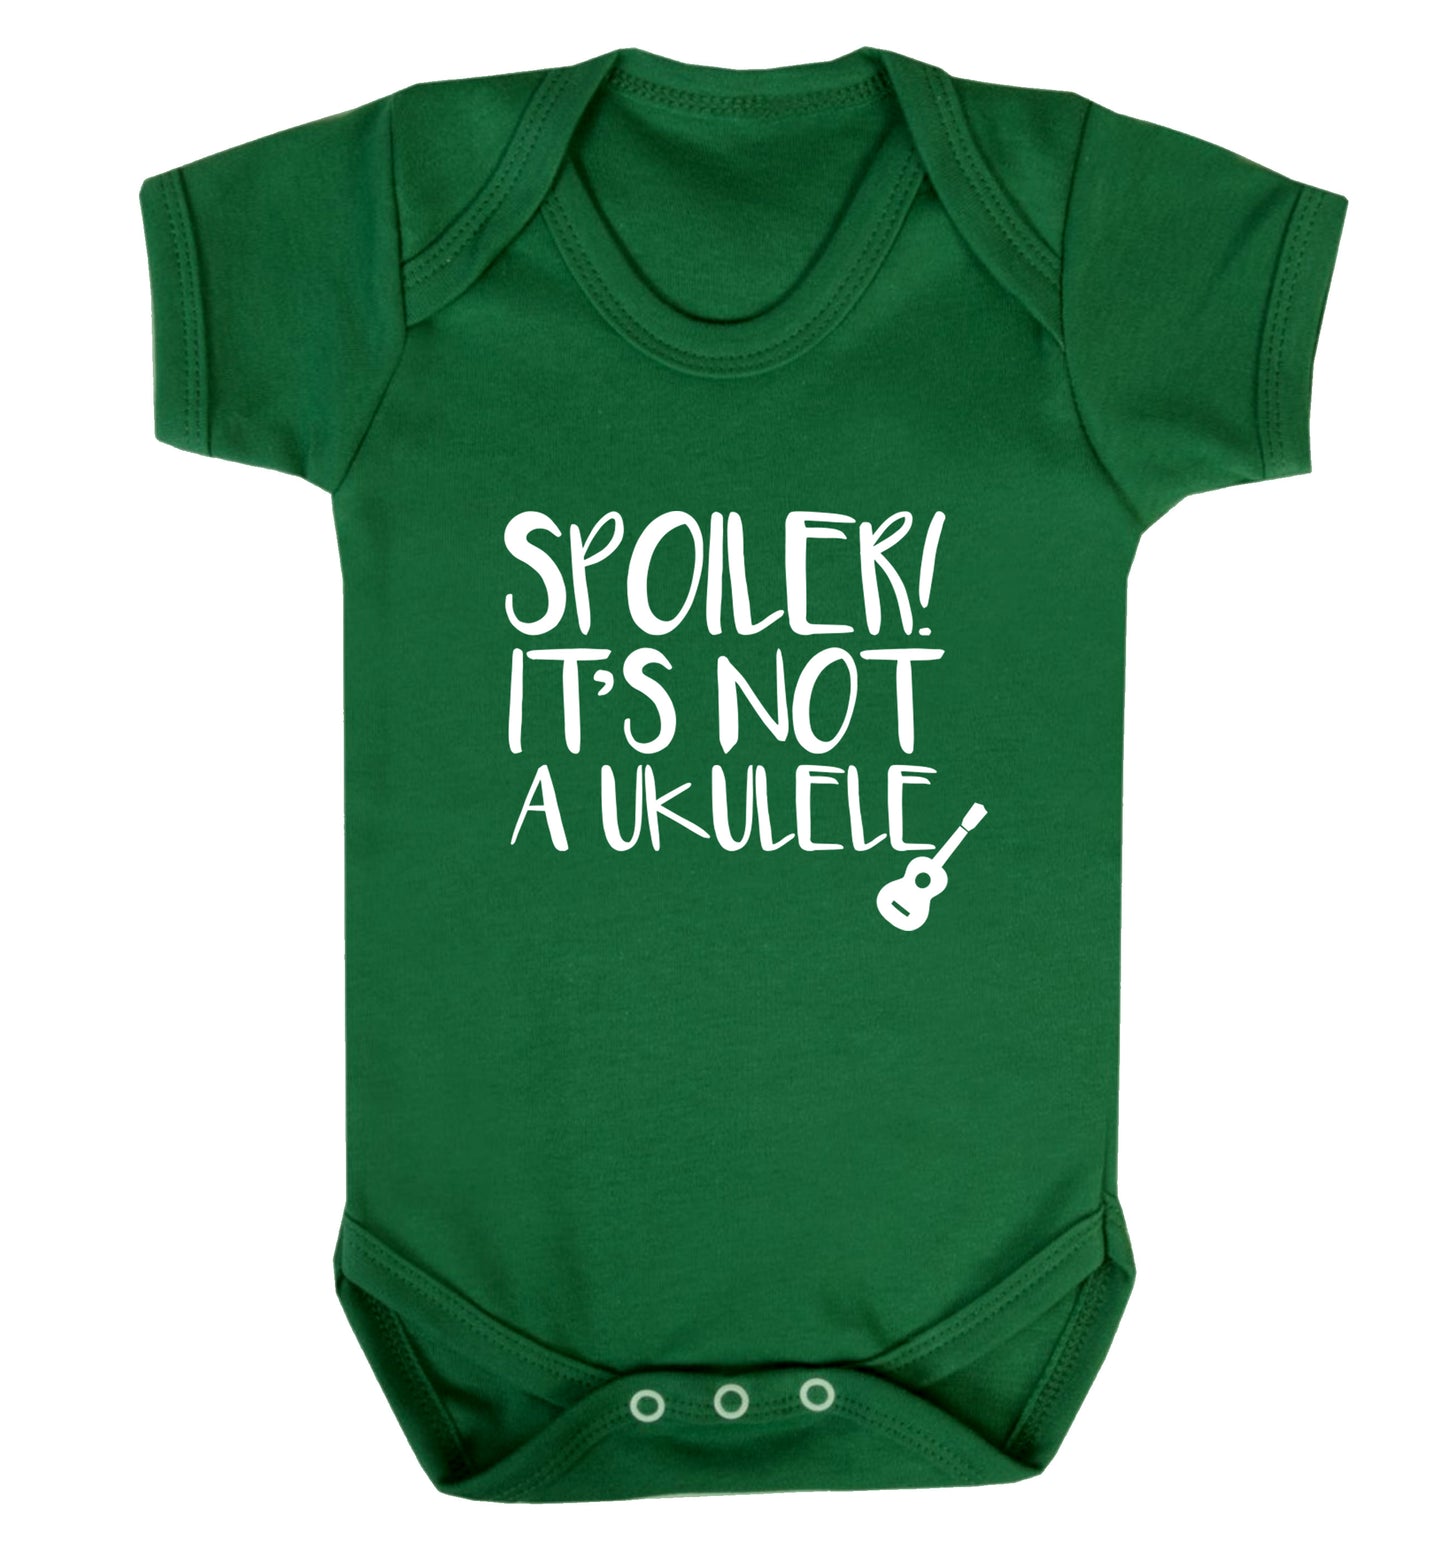 Spoiler it's not a ukulele Baby Vest green 18-24 months